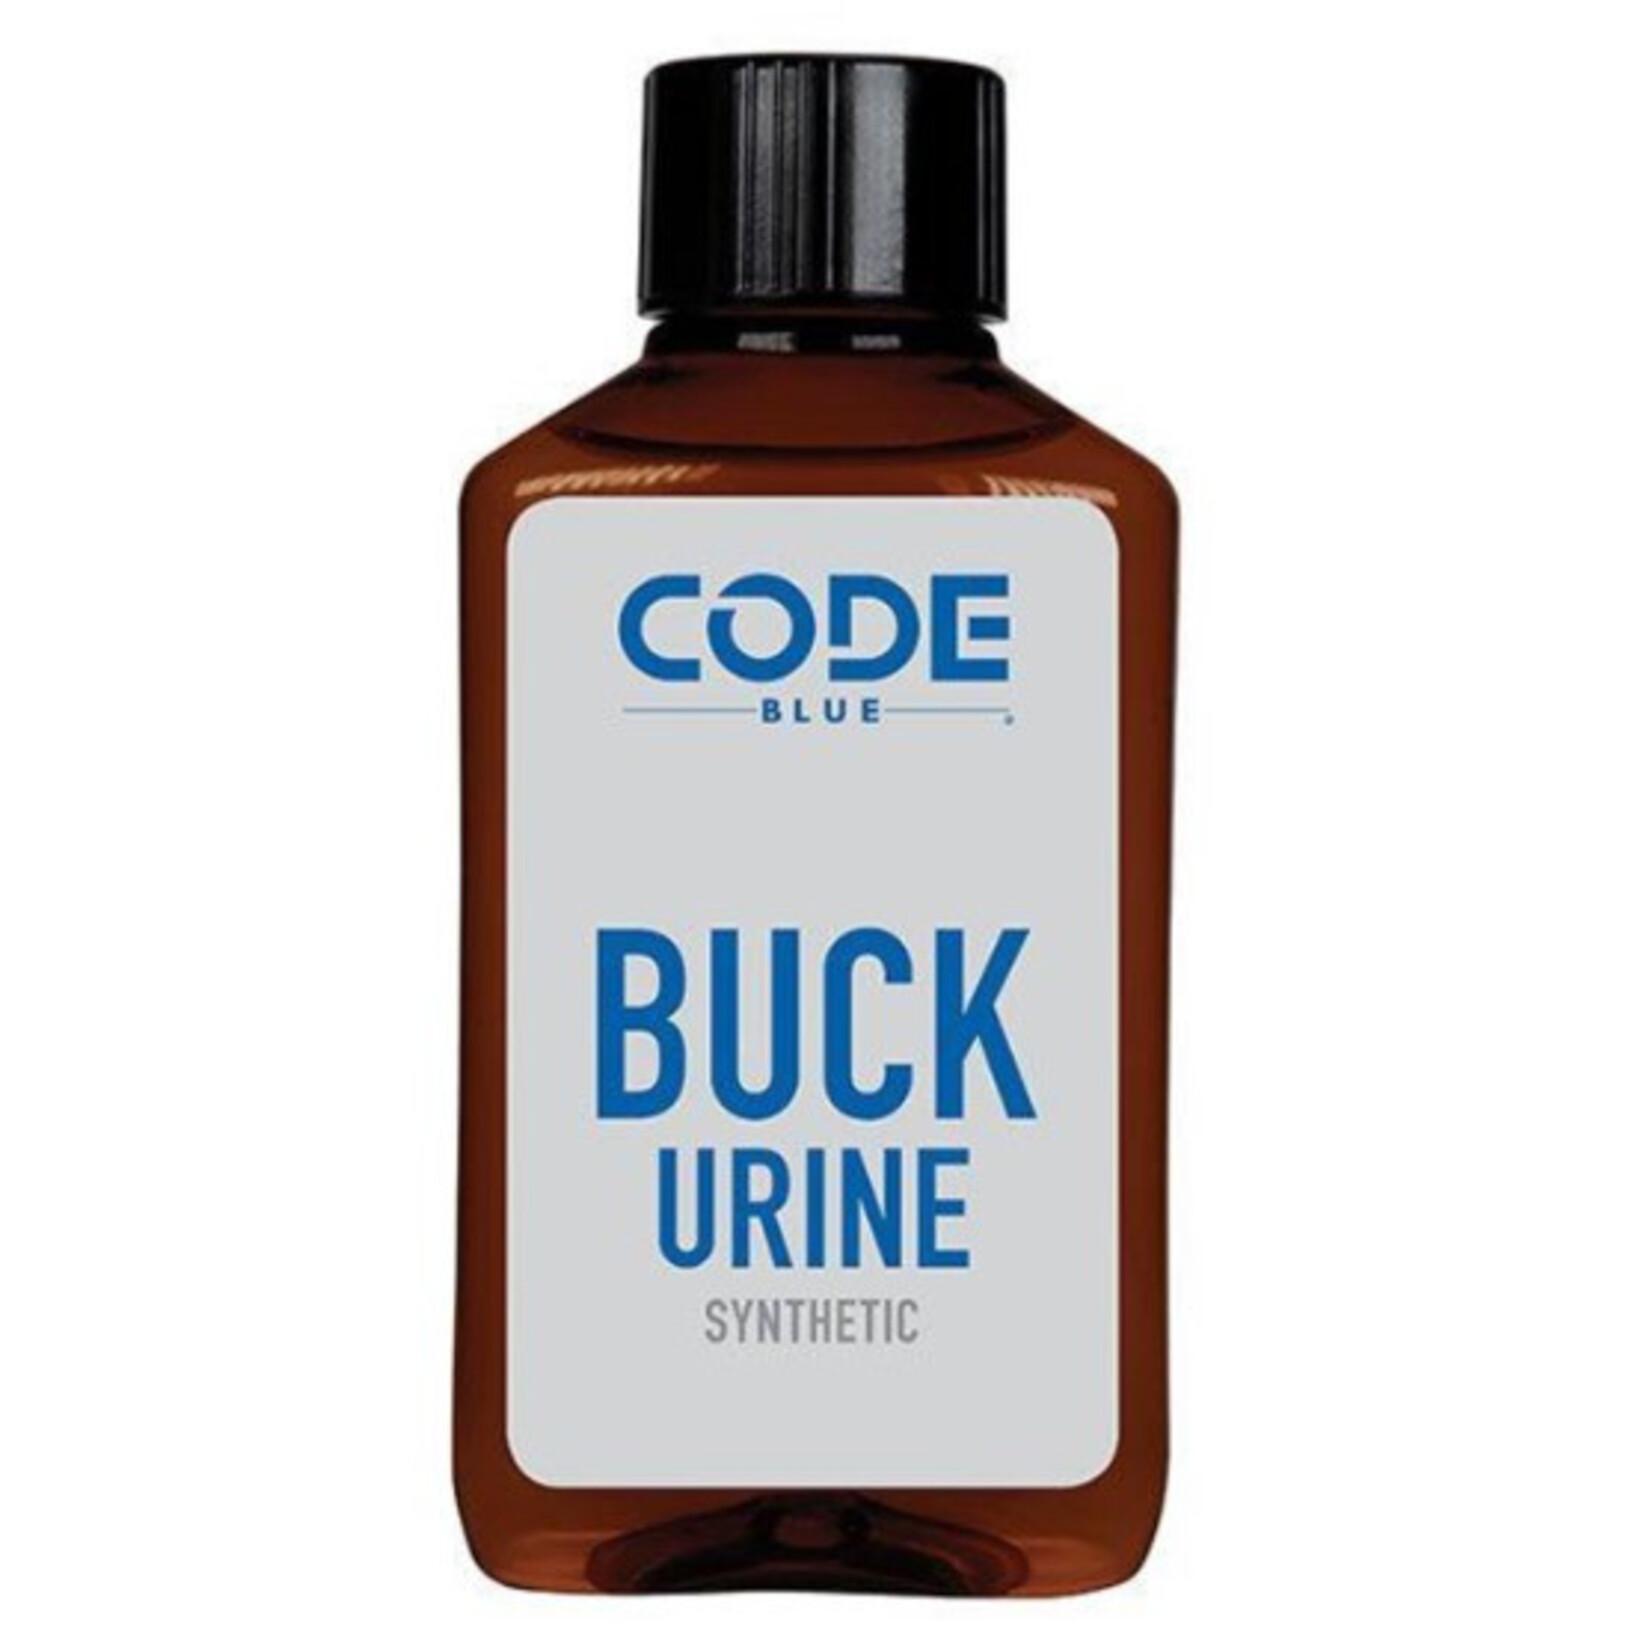 CODE BLUE Urine Chevreuil Code Blue Buck Synthétique 4Oz